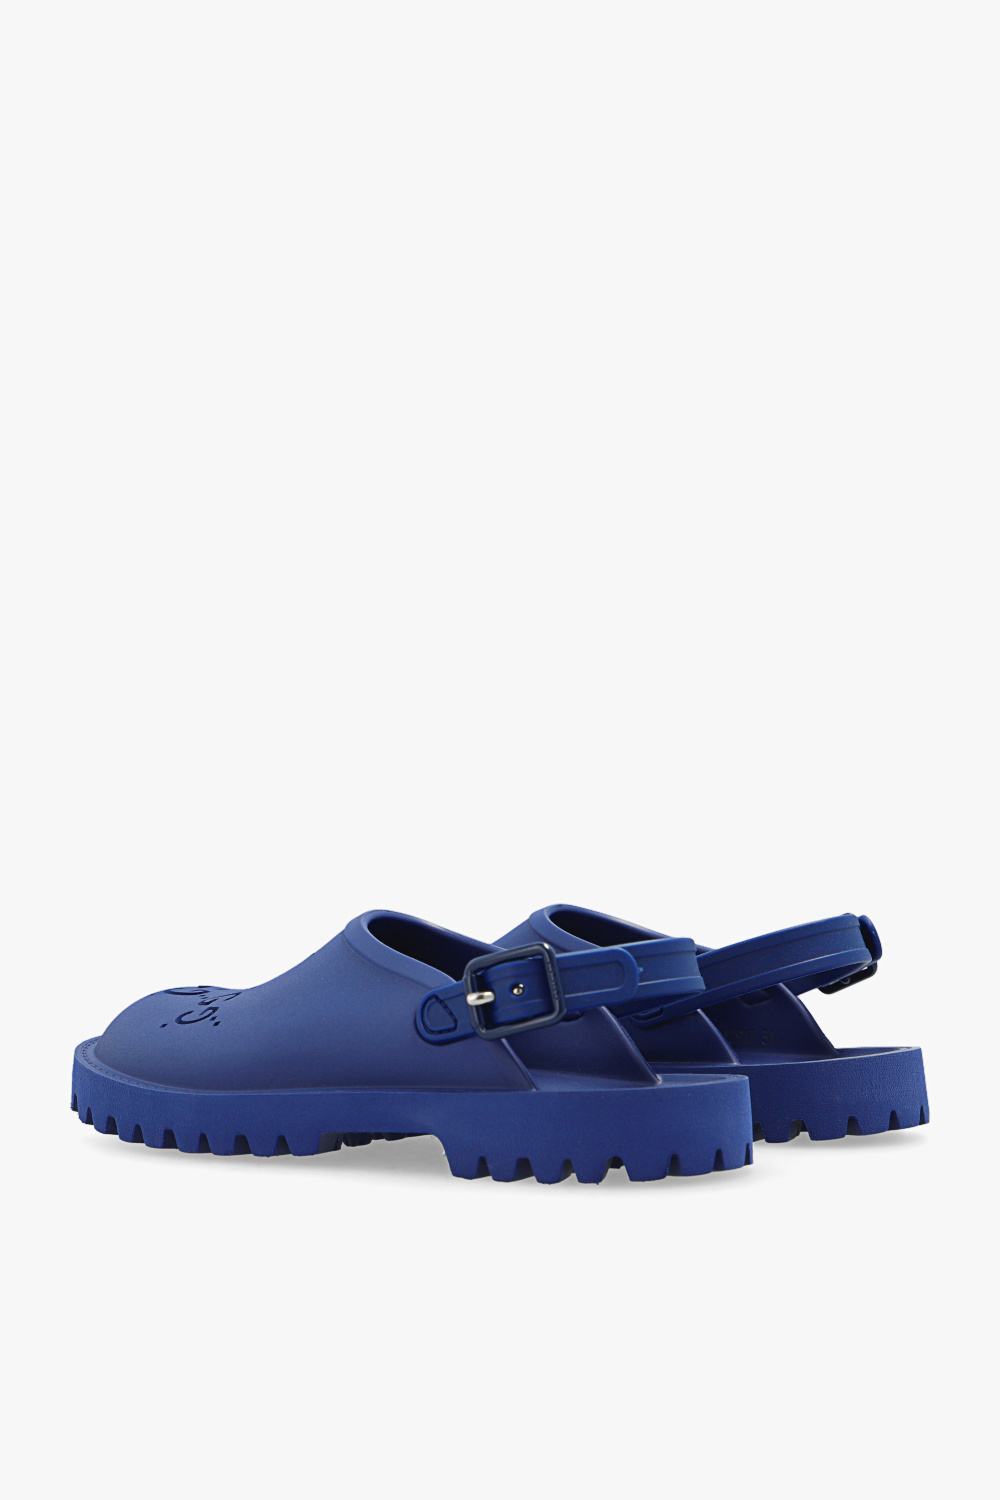 Gucci Kids Rubber sandals